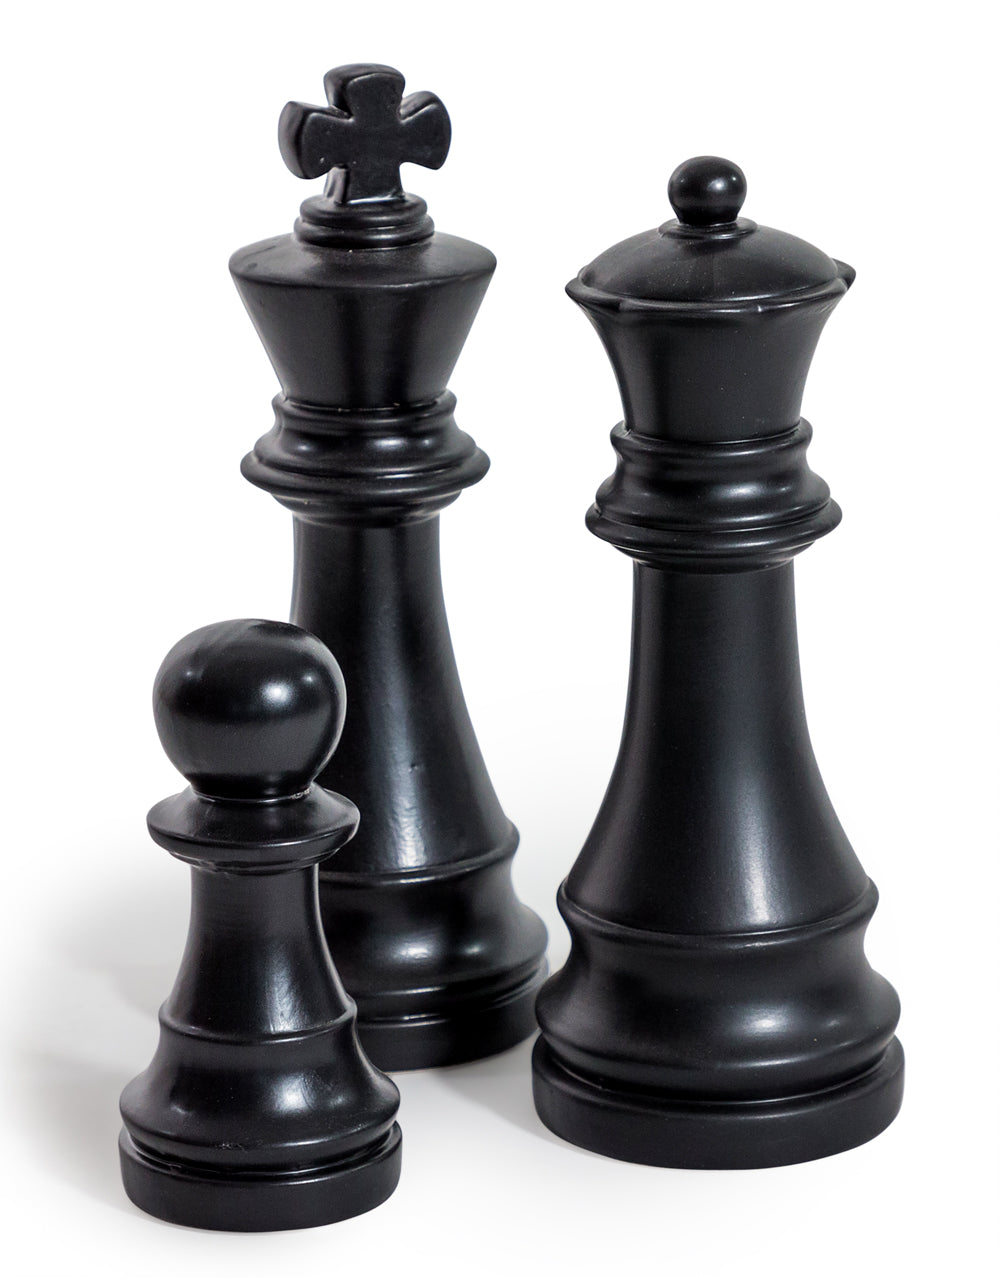 Matte Black Pawn Chess Piece Ornament